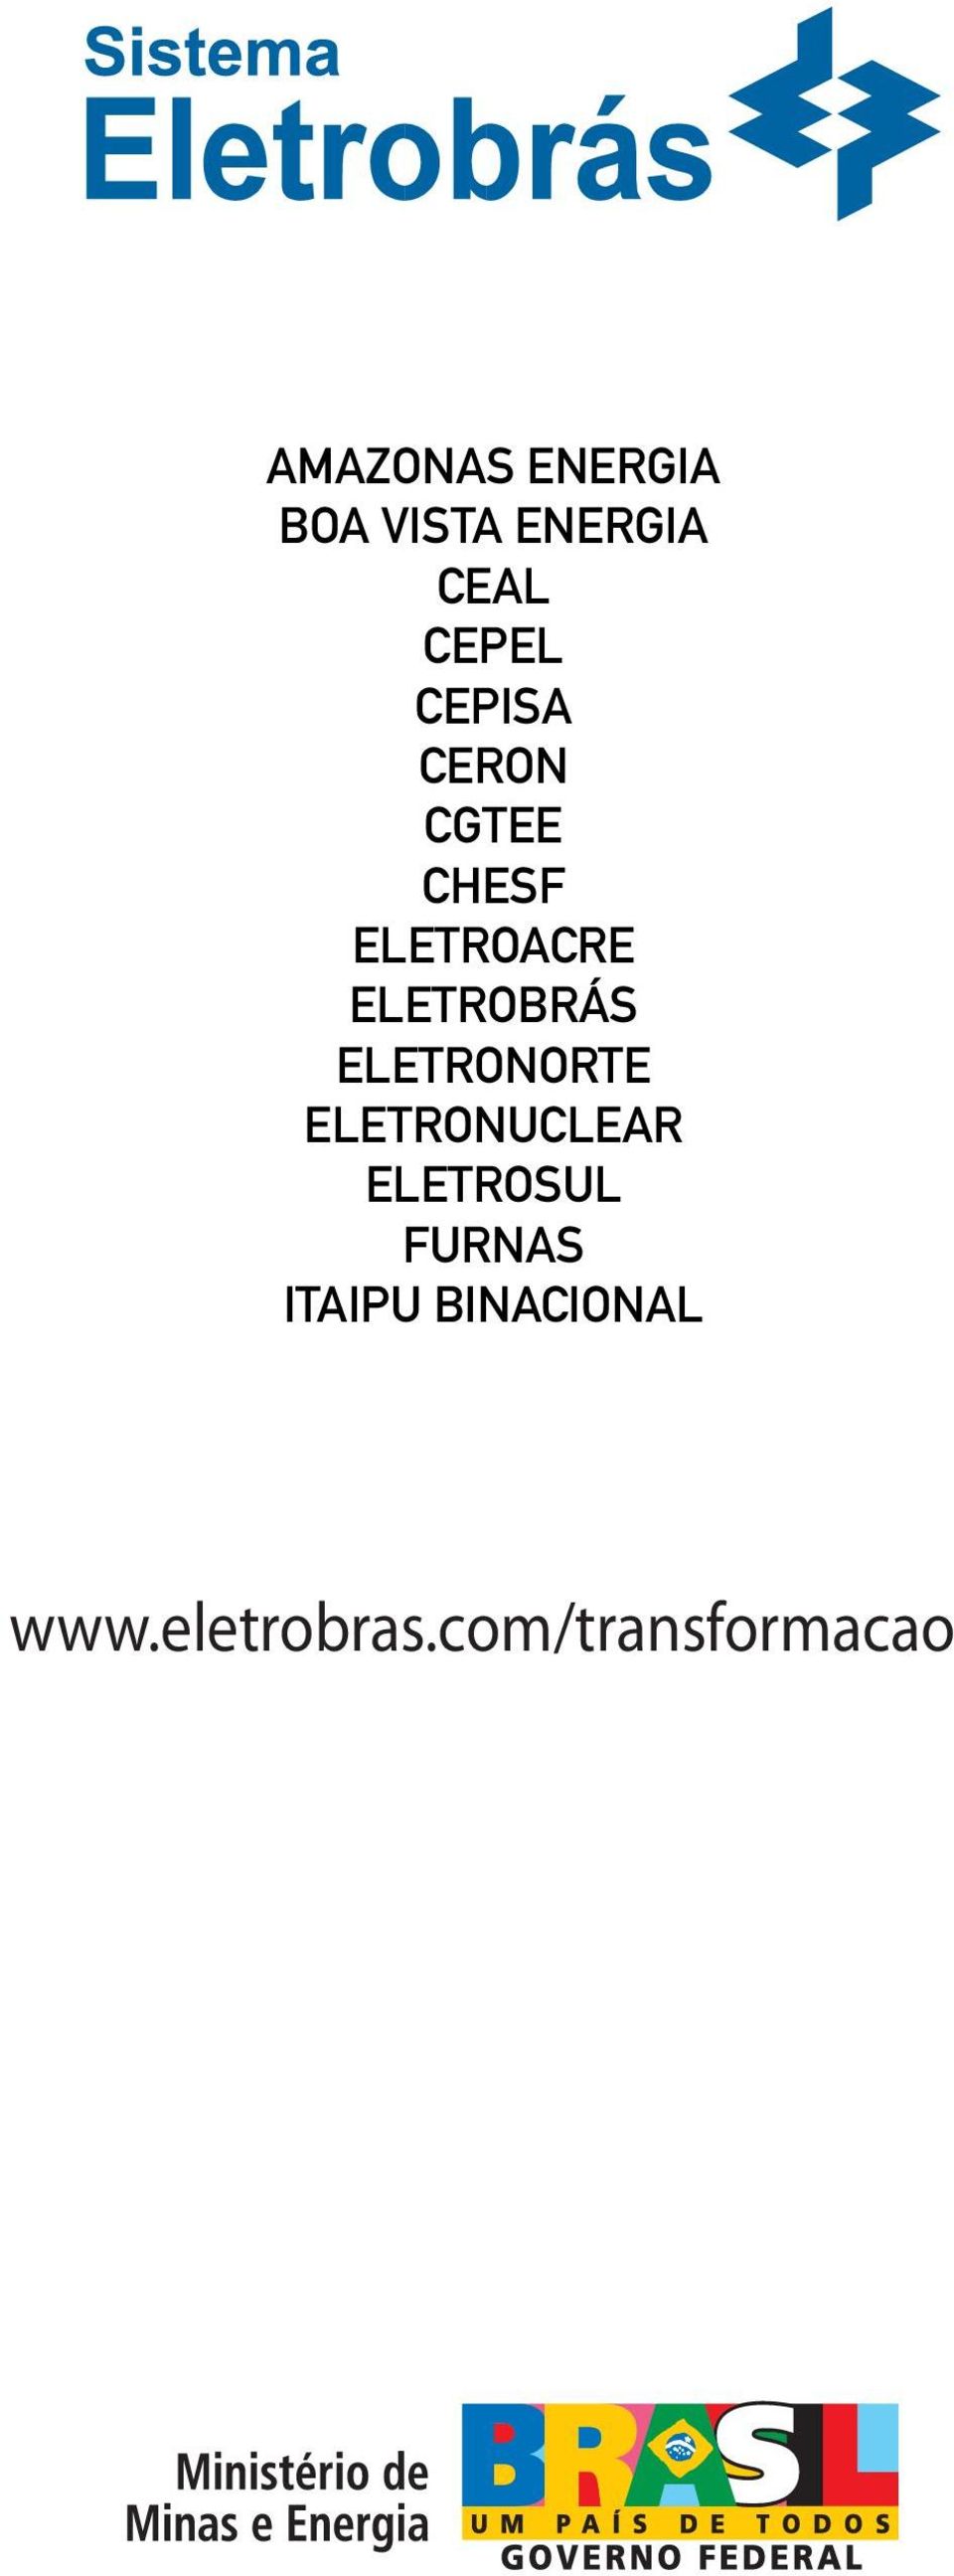 ELETRONORTE ELETRONUCLEAR ELETROSUL FURNAS